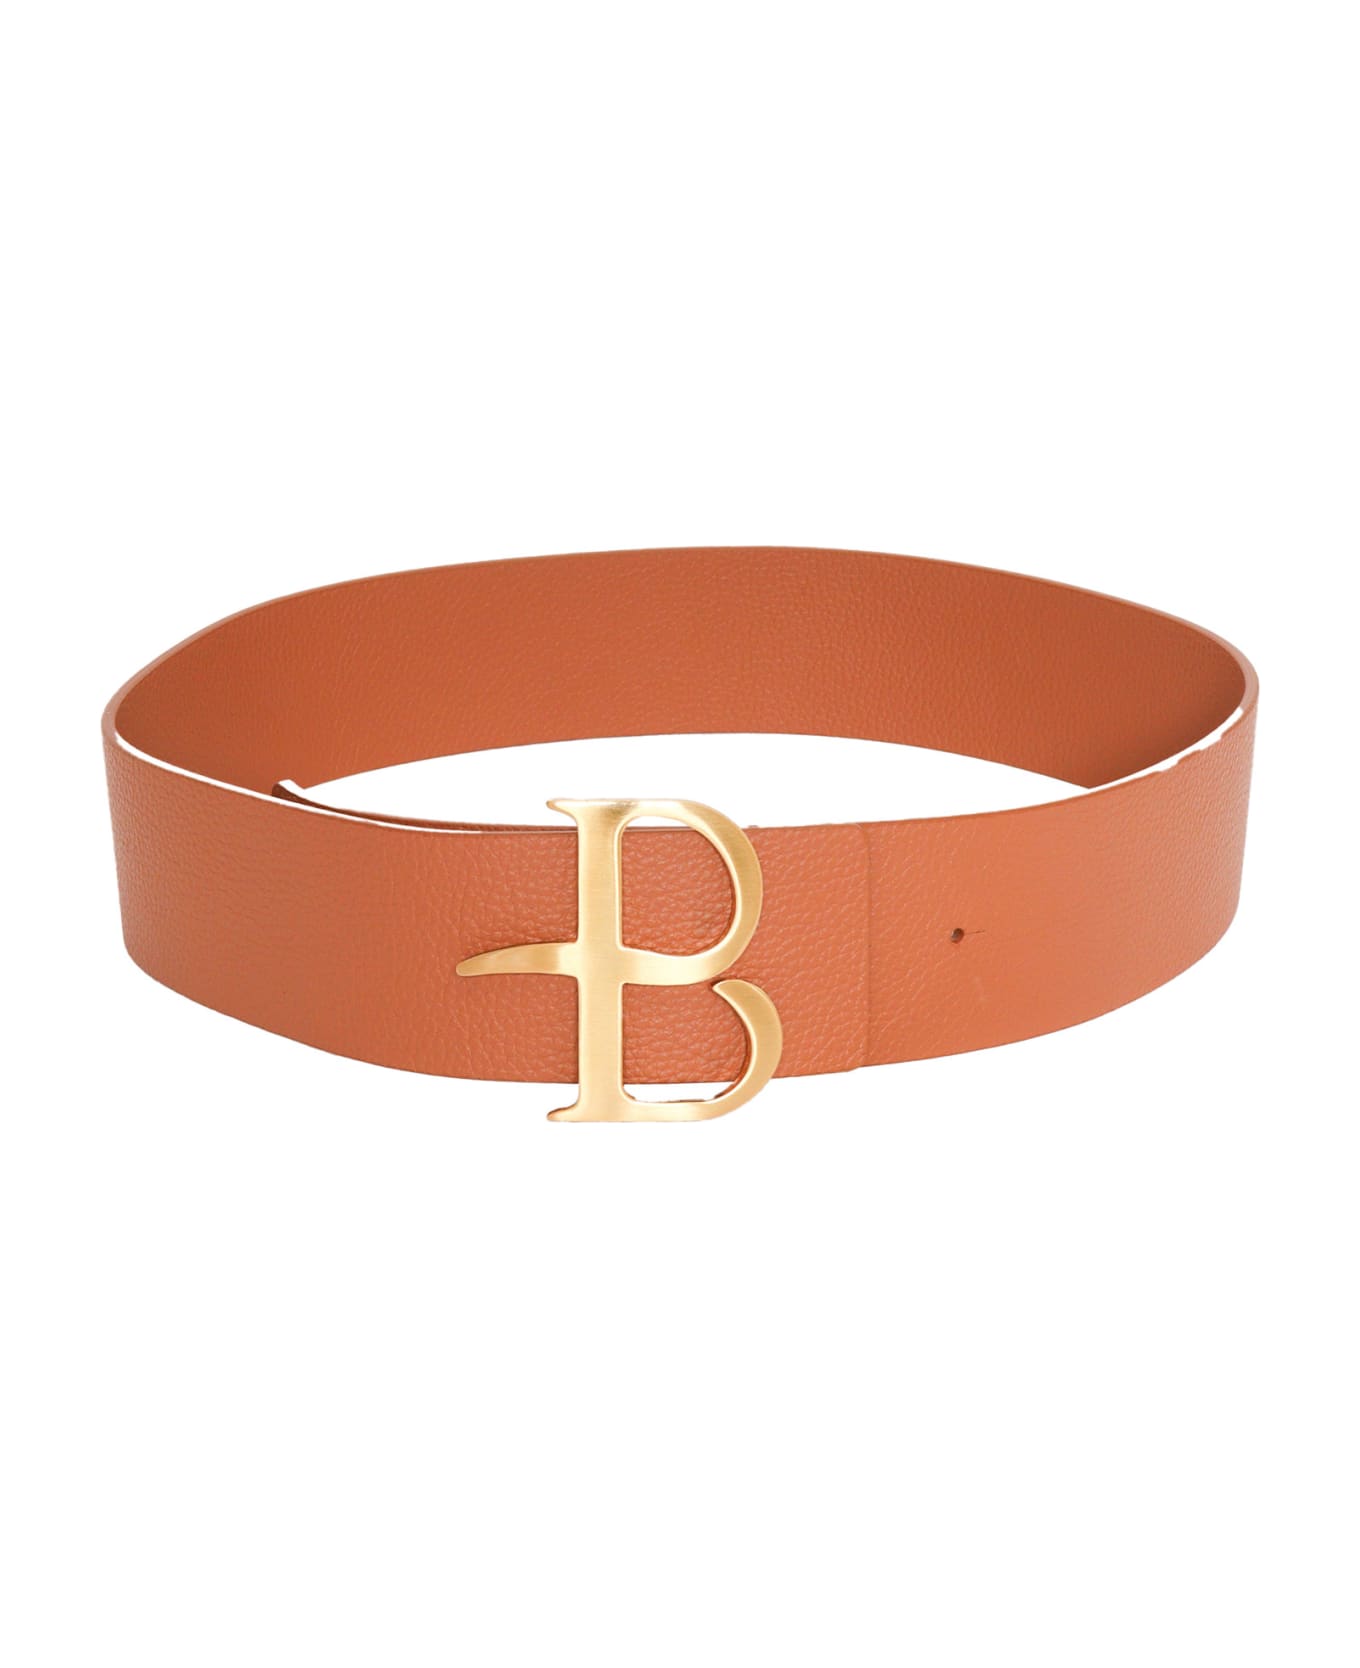 Ballantyne B Belt - BROWN